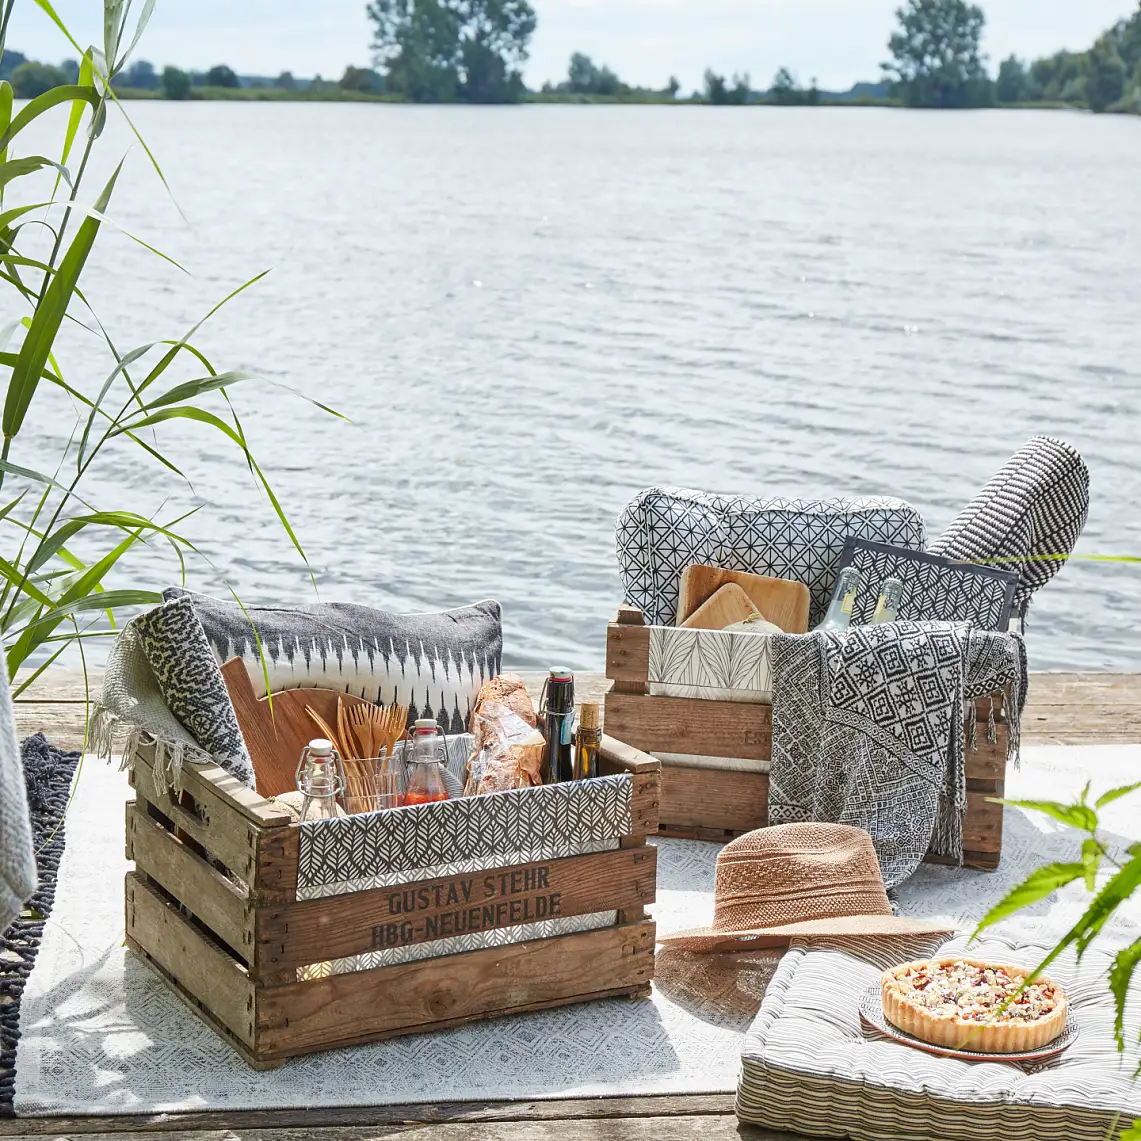 Simple but stylish picnic hamper